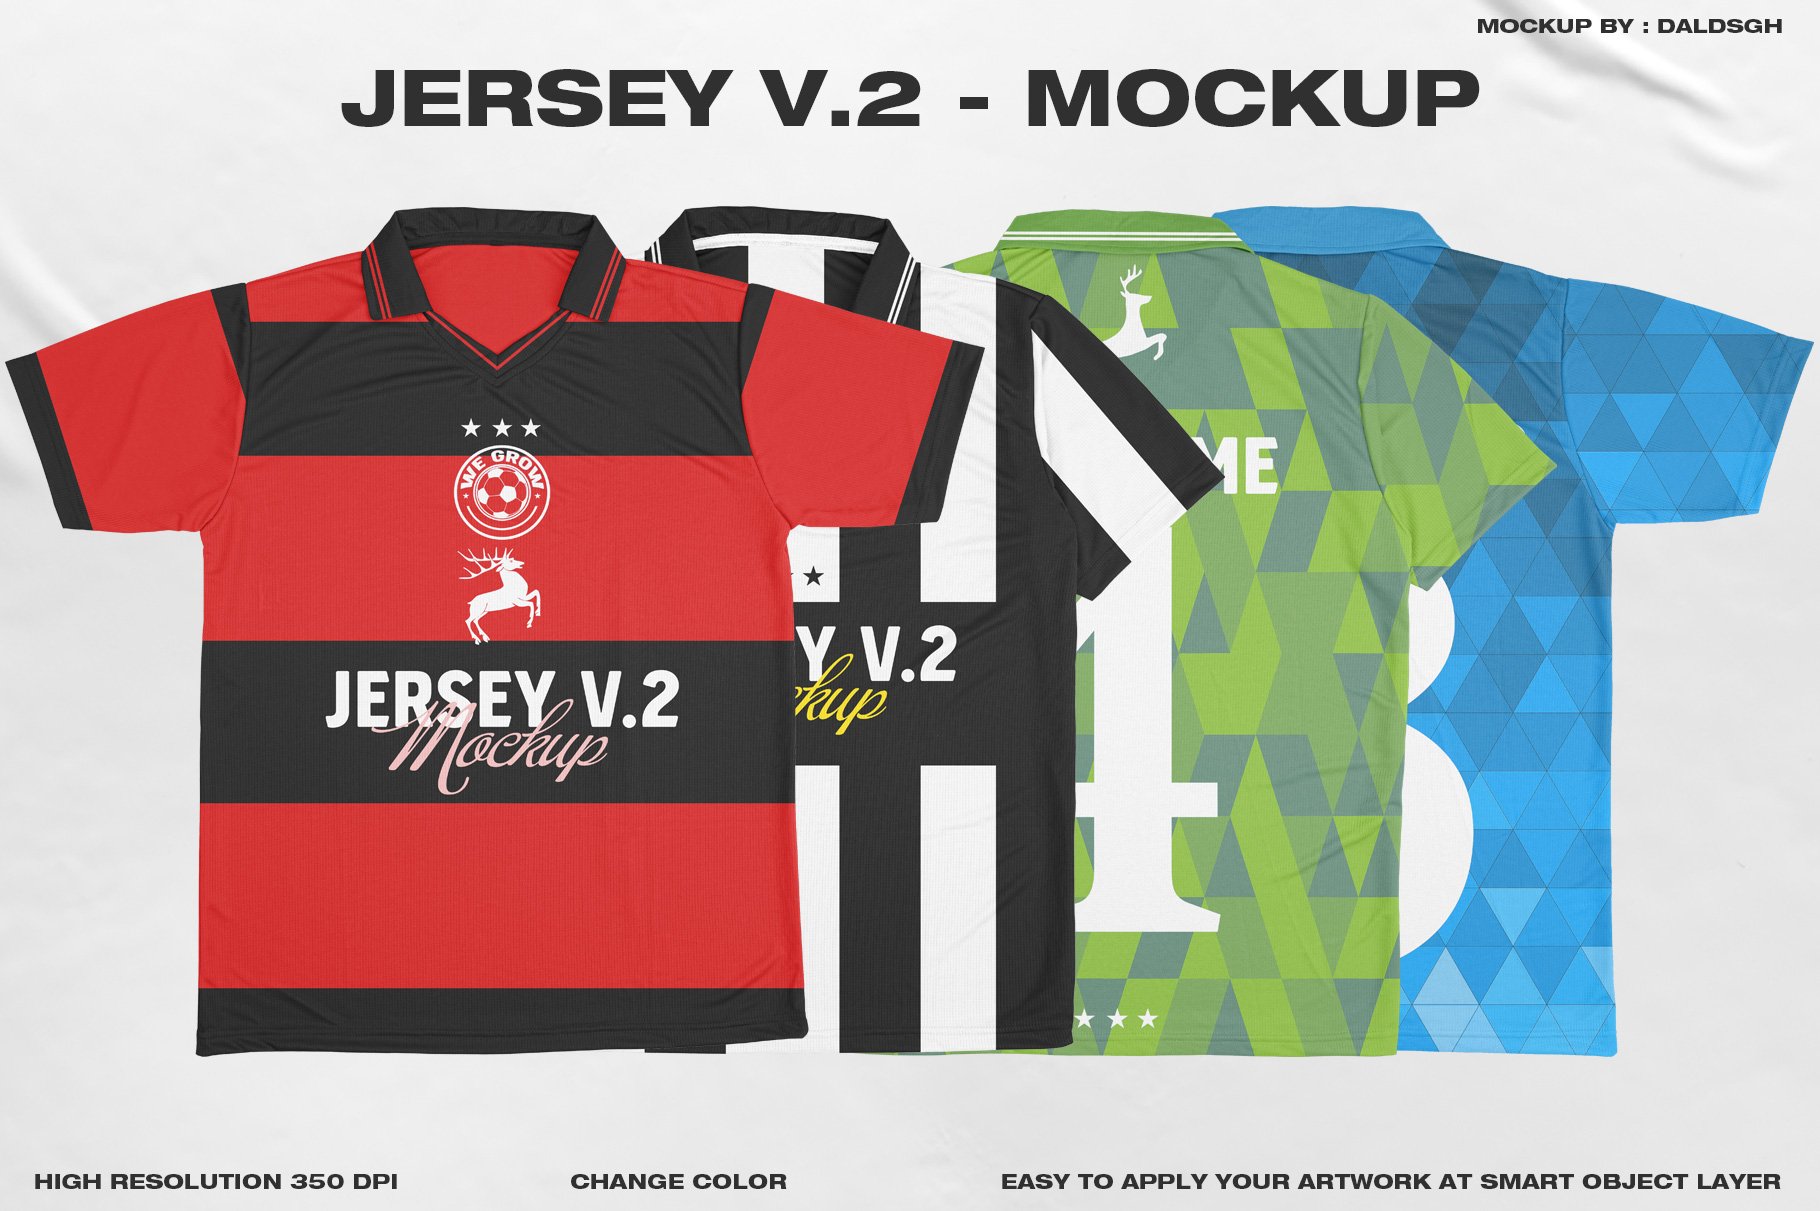 Jersey V.2 - Mockup cover image.